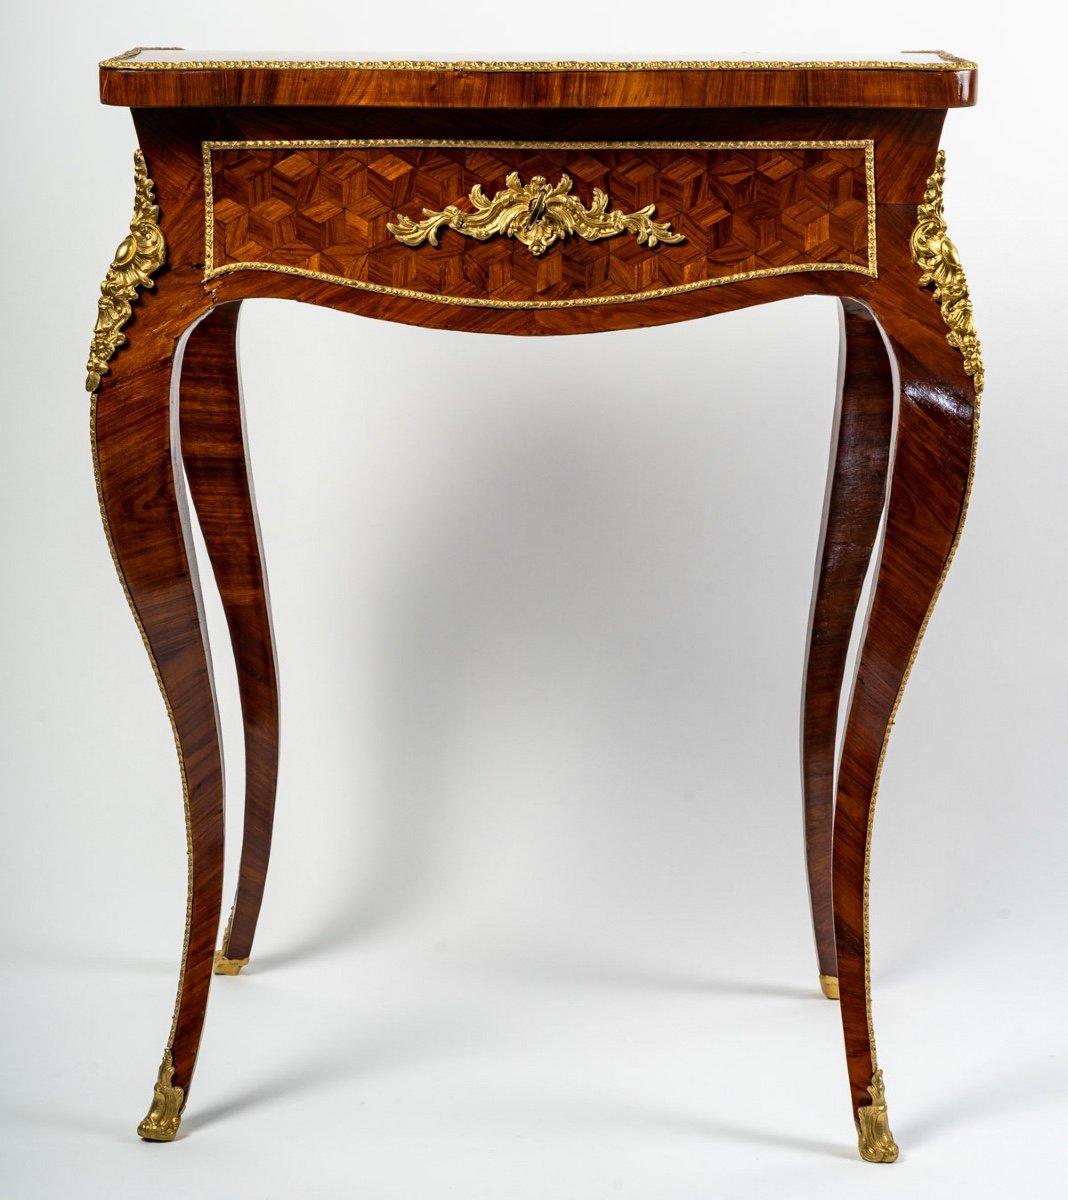 Napoleon III Work Table, Rosewood Veneer, Attributed to François Linke, Period: 19th Century